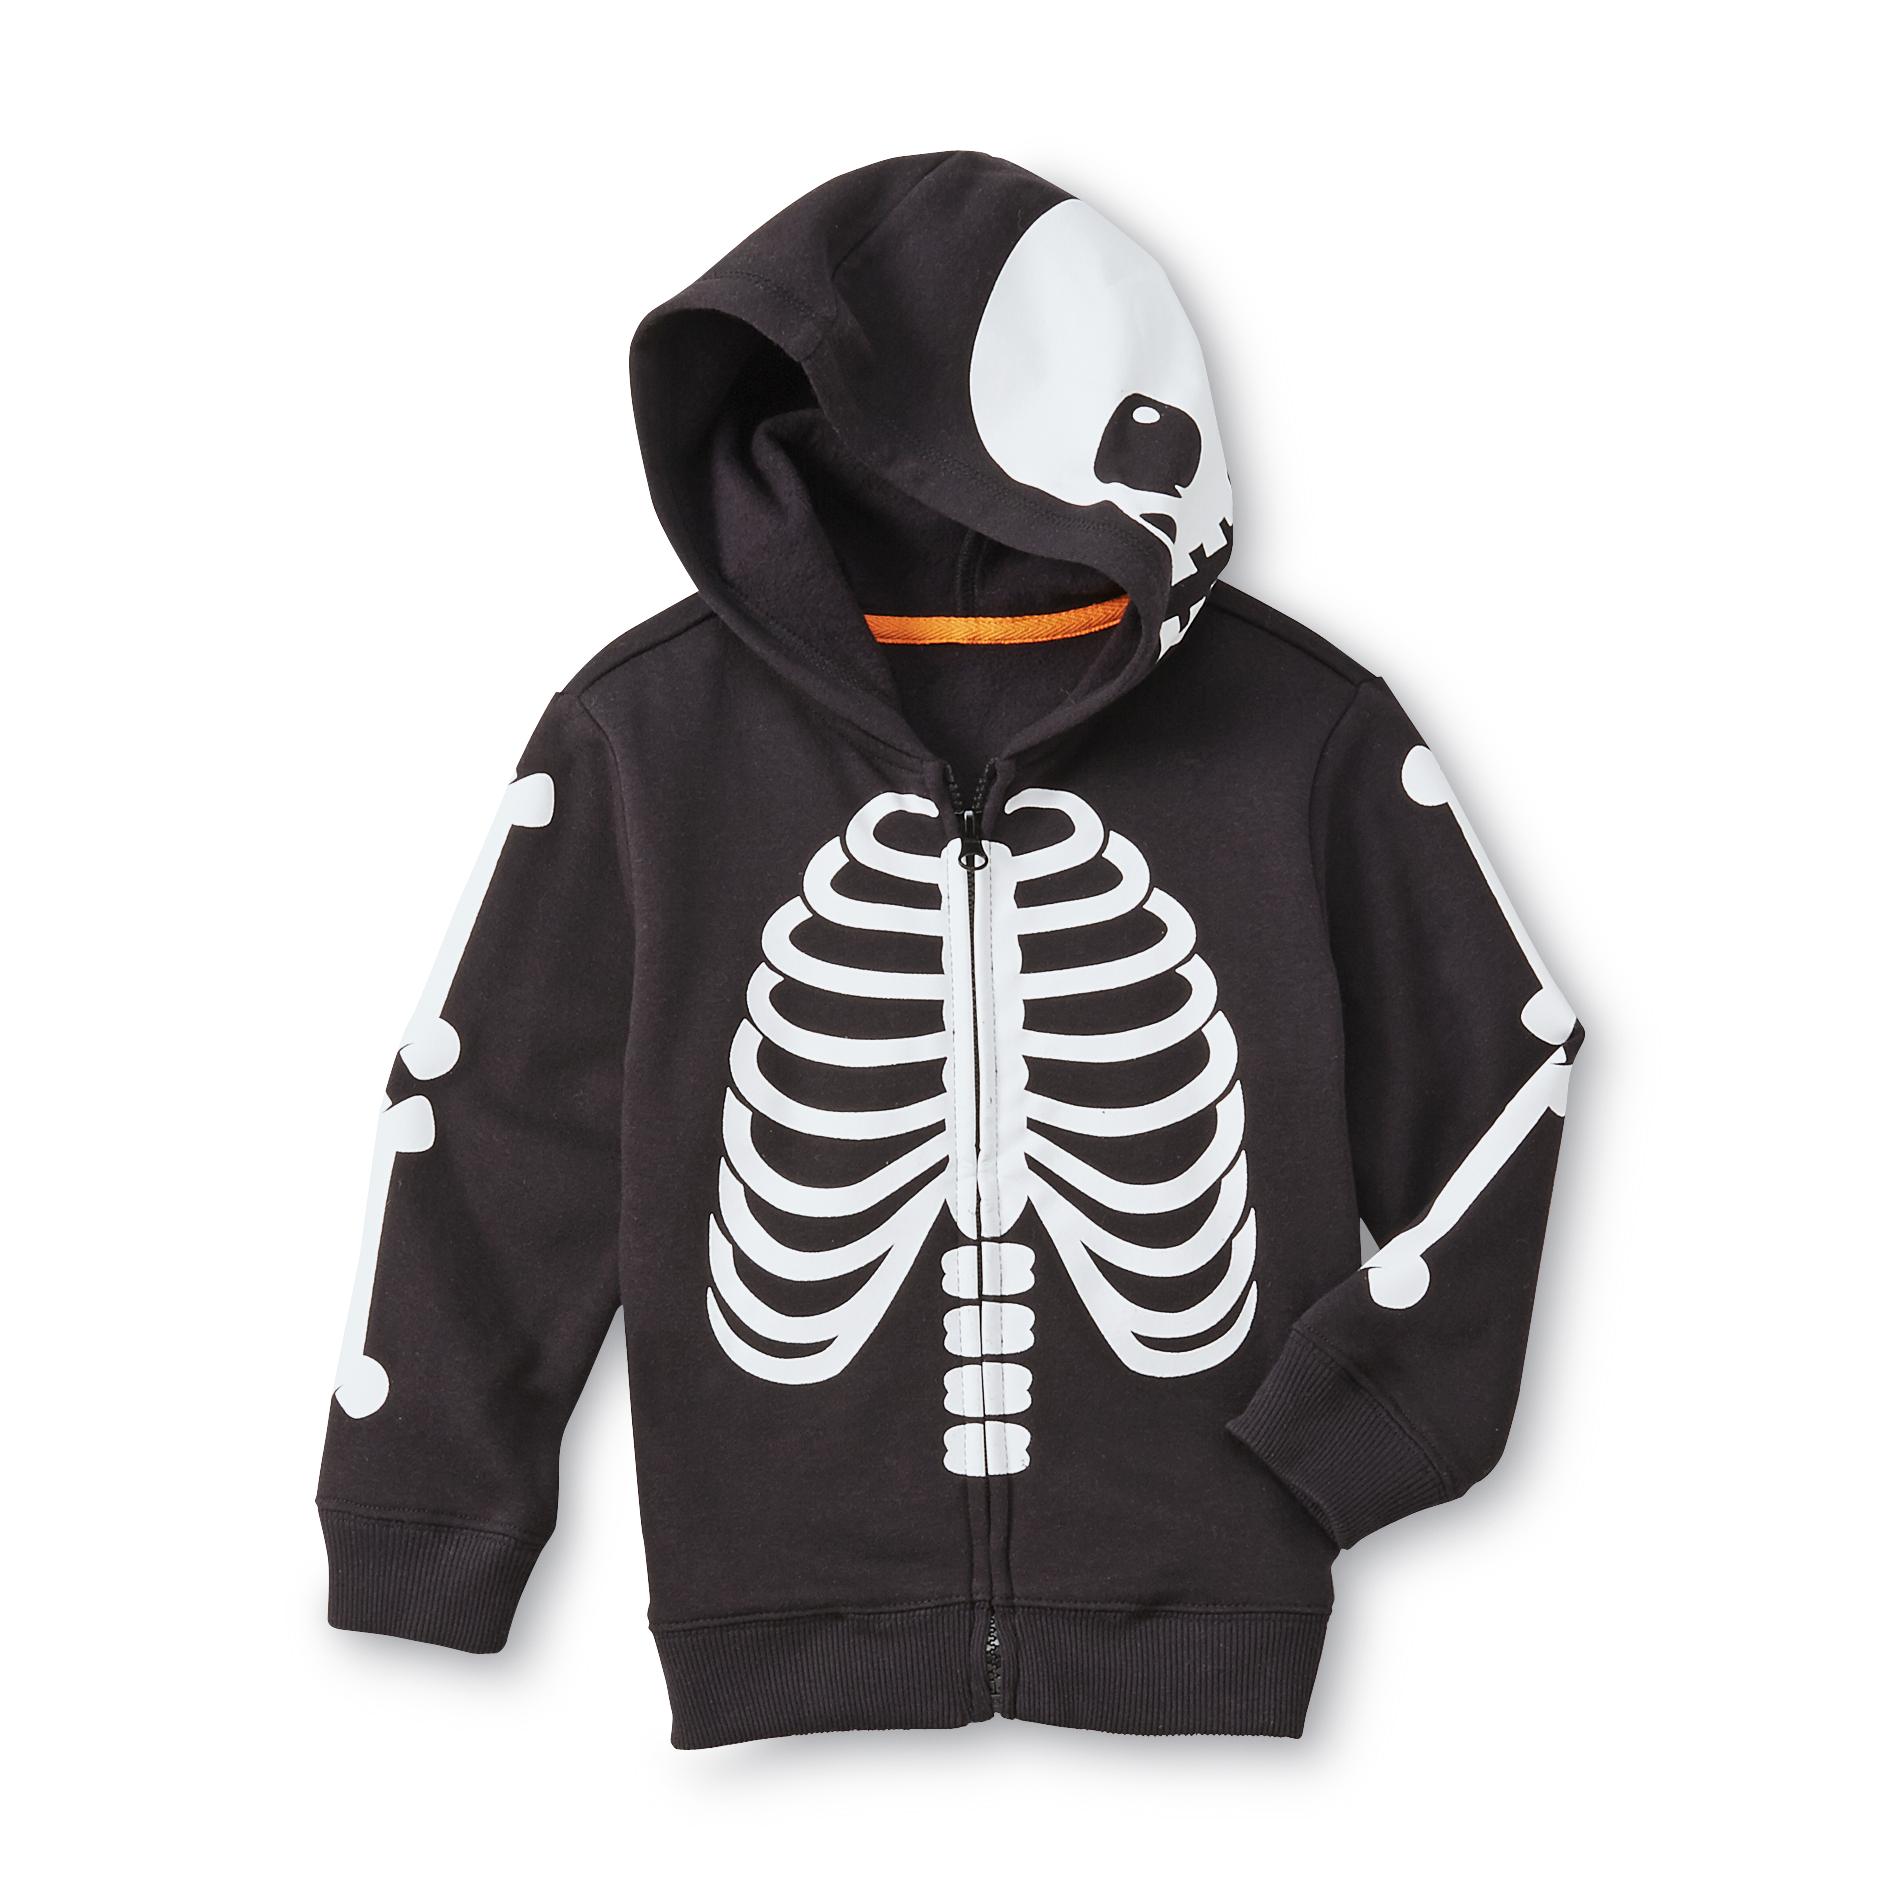 WonderKids Infant & Toddler Boy's Graphic Hoodie Jacket - Skeleton